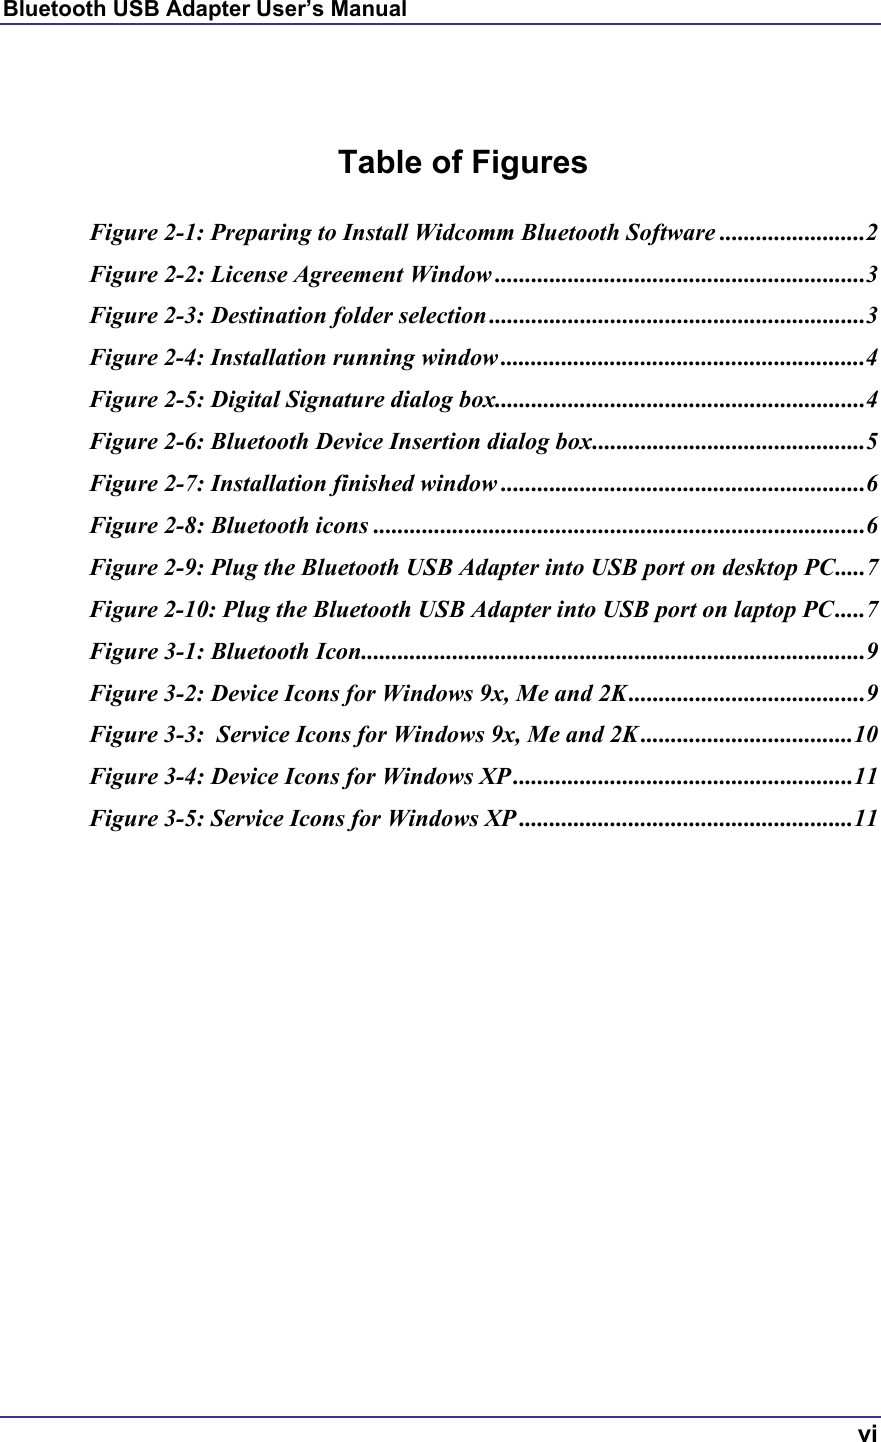 Bluetooth USB Adapter User’s Manual  vi   Table of Figures  Figure 2-1: Preparing to Install Widcomm Bluetooth Software ........................2 Figure 2-2: License Agreement Window .............................................................3 Figure 2-3: Destination folder selection ..............................................................3 Figure 2-4: Installation running window ............................................................4 Figure 2-5: Digital Signature dialog box.............................................................4 Figure 2-6: Bluetooth Device Insertion dialog box.............................................5 Figure 2-7: Installation finished window ............................................................6 Figure 2-8: Bluetooth icons .................................................................................6 Figure 2-9: Plug the Bluetooth USB Adapter into USB port on desktop PC.....7 Figure 2-10: Plug the Bluetooth USB Adapter into USB port on laptop PC.....7 Figure 3-1: Bluetooth Icon...................................................................................9 Figure 3-2: Device Icons for Windows 9x, Me and 2K.......................................9 Figure 3-3:  Service Icons for Windows 9x, Me and 2K...................................10 Figure 3-4: Device Icons for Windows XP........................................................11 Figure 3-5: Service Icons for Windows XP .......................................................11   